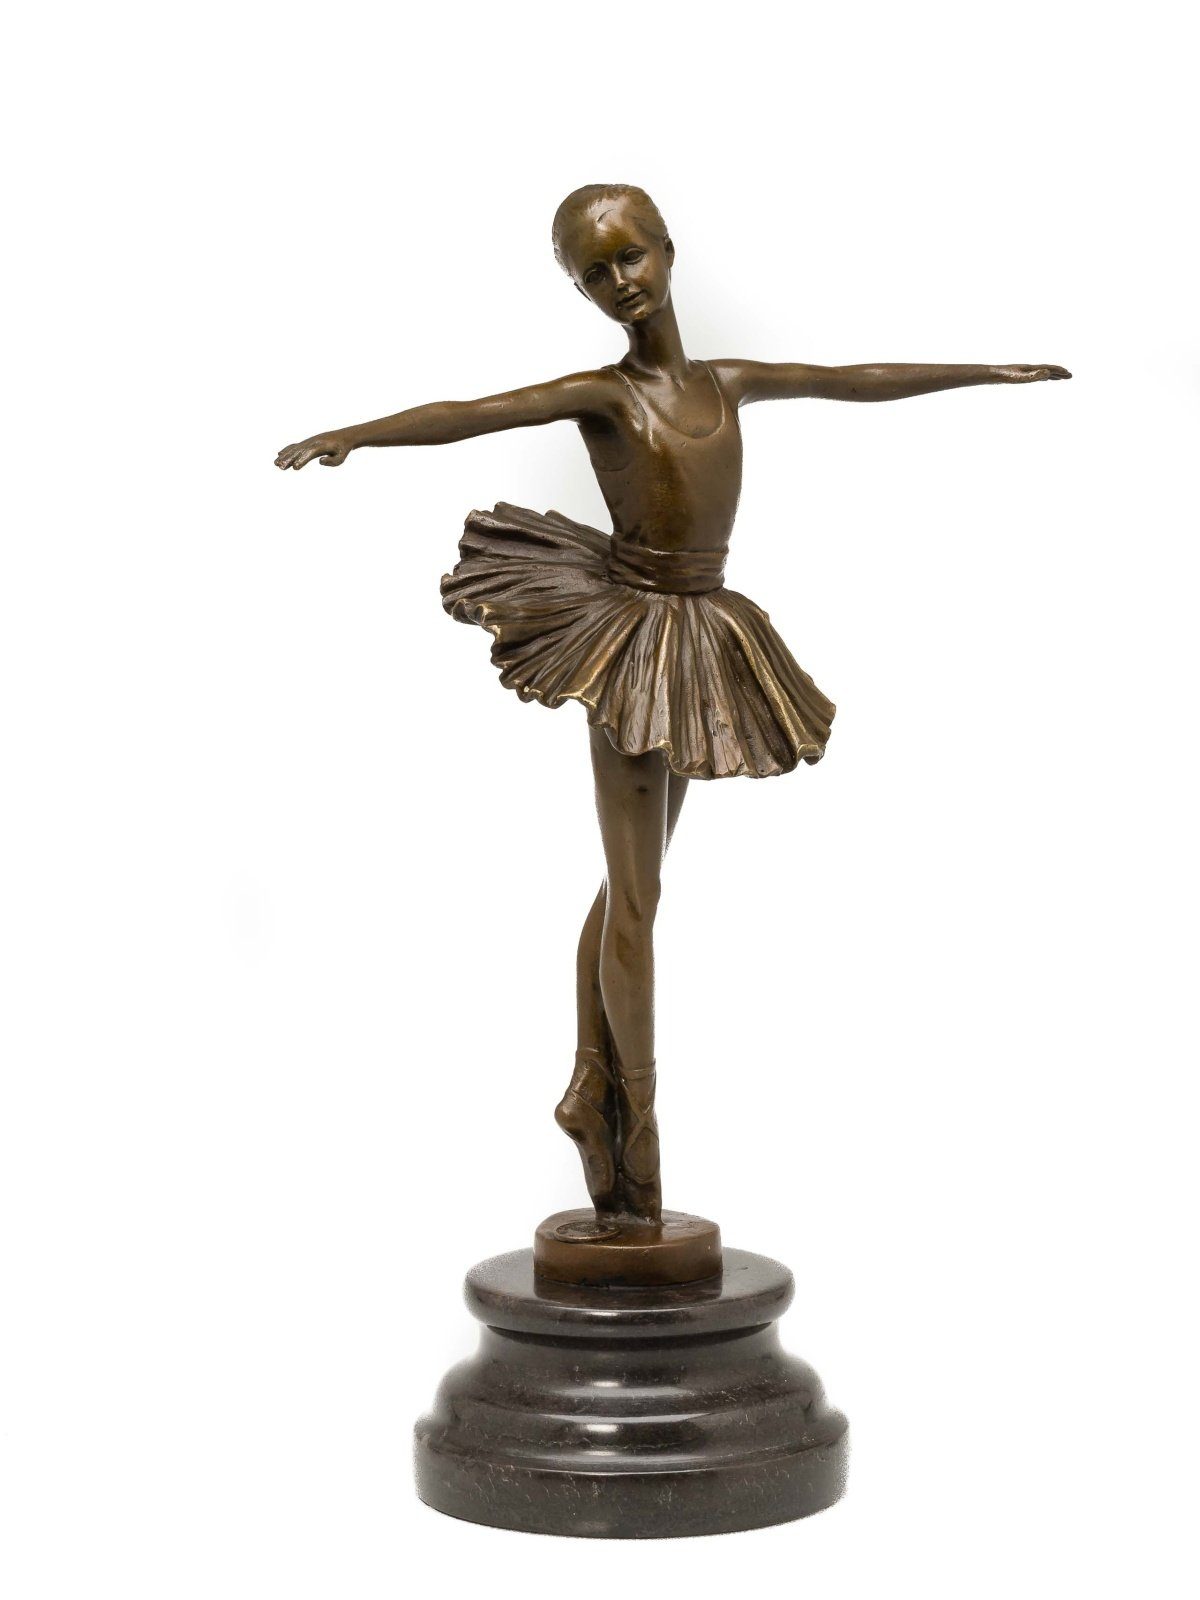 Aubaho Skulptur Bronzeskulptur nach Degas Ballerina Bronze Kopie Replik Figur Antik-St